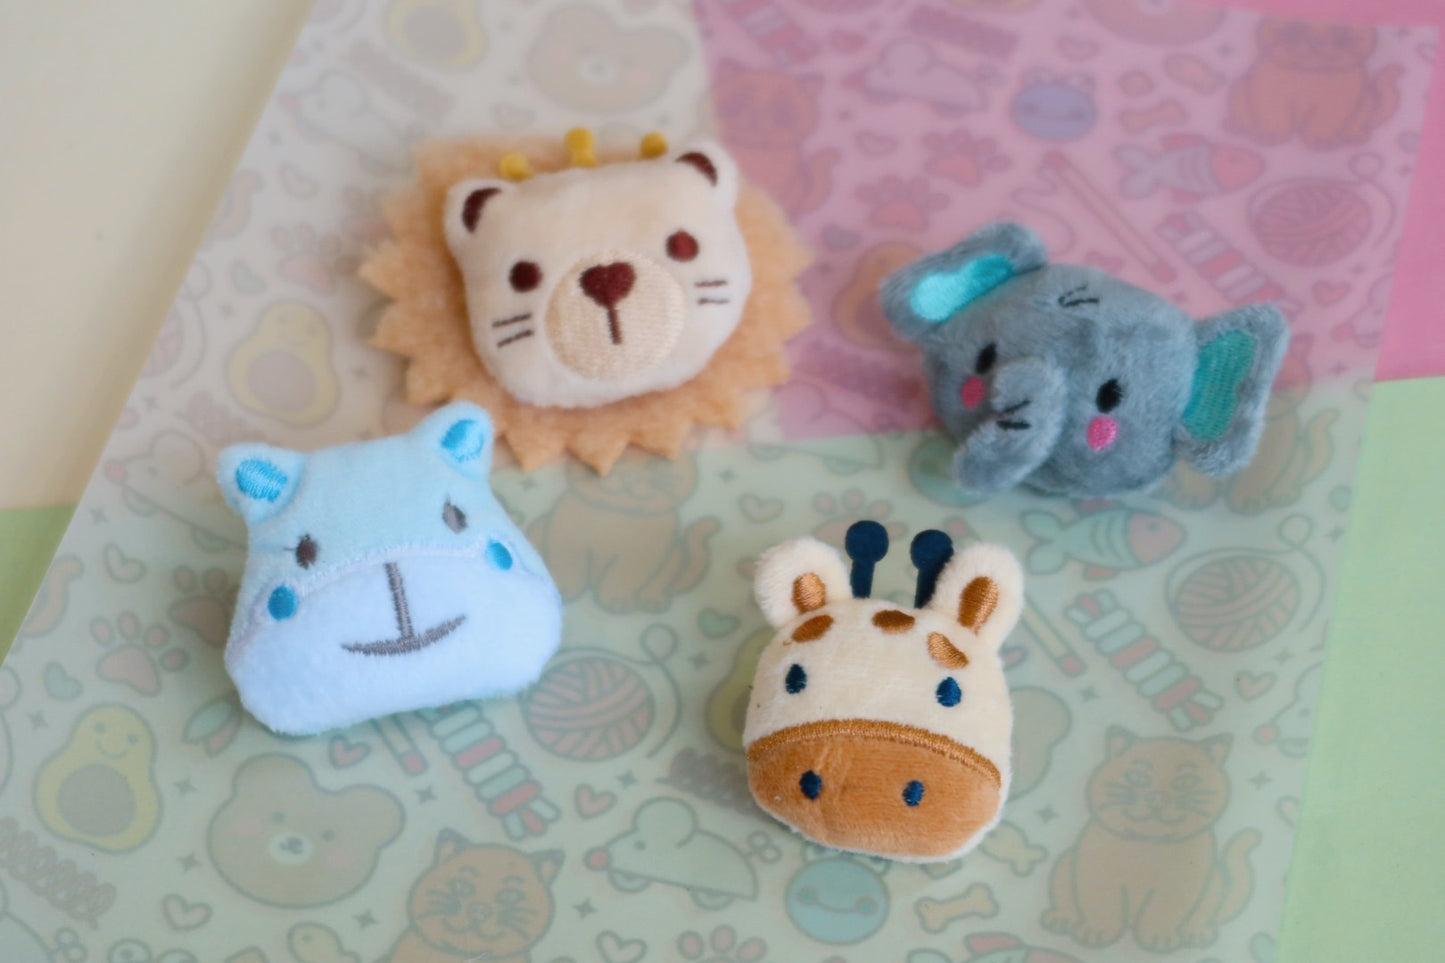 The Safari Catnip Cat Toy Collection - Kitten Gift Game Fun